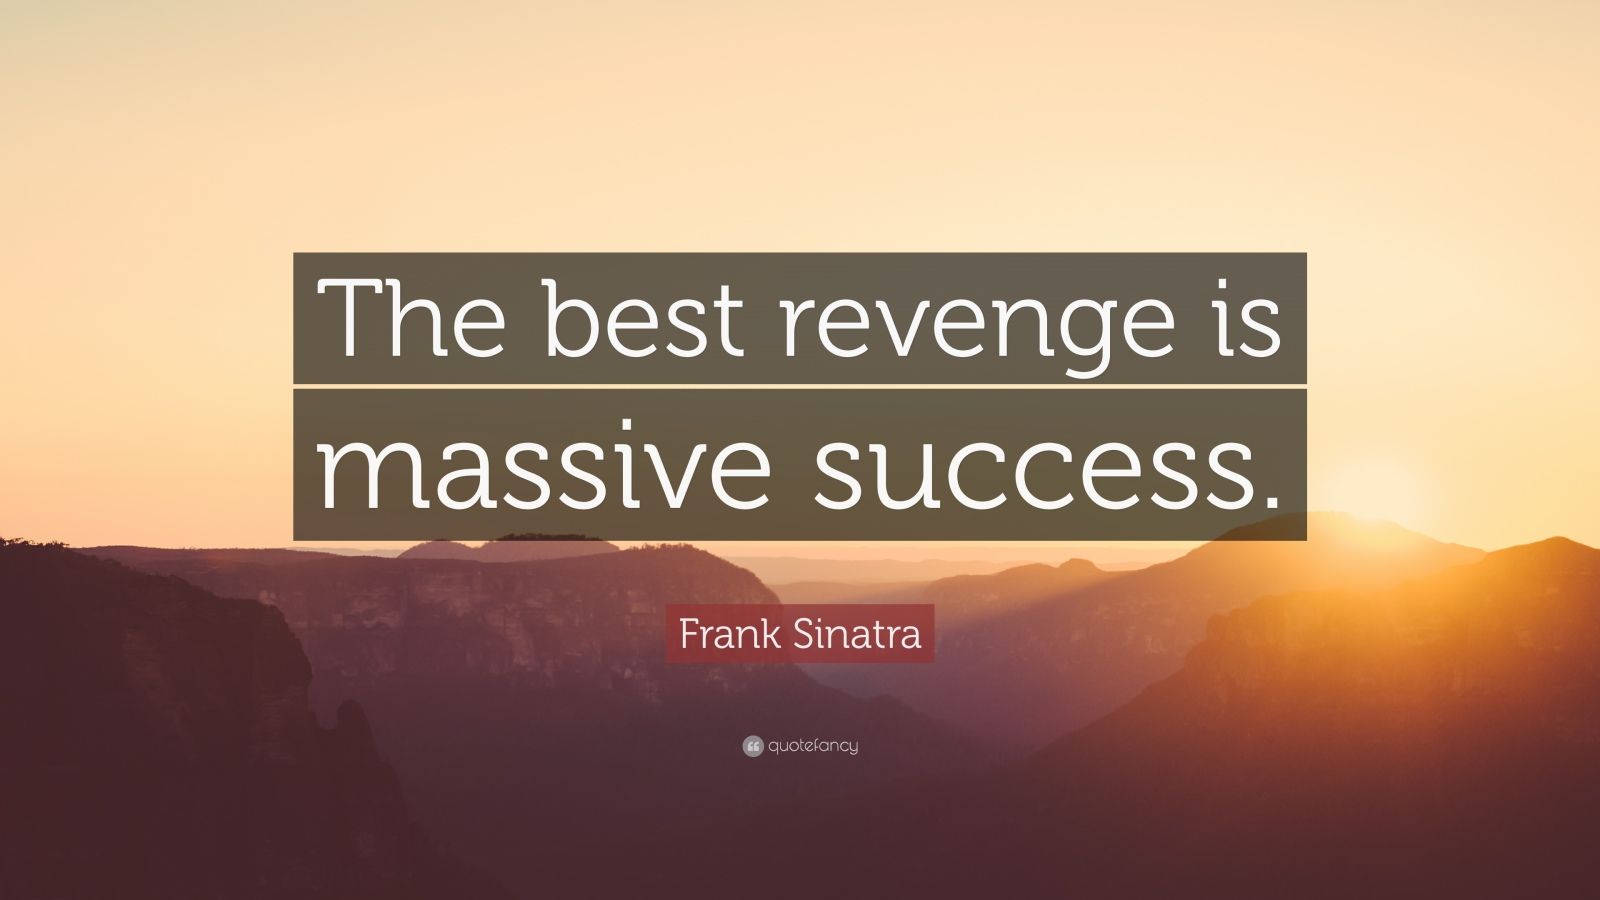 Frank Sinatra Quote: “The best revenge is massive success.” (18